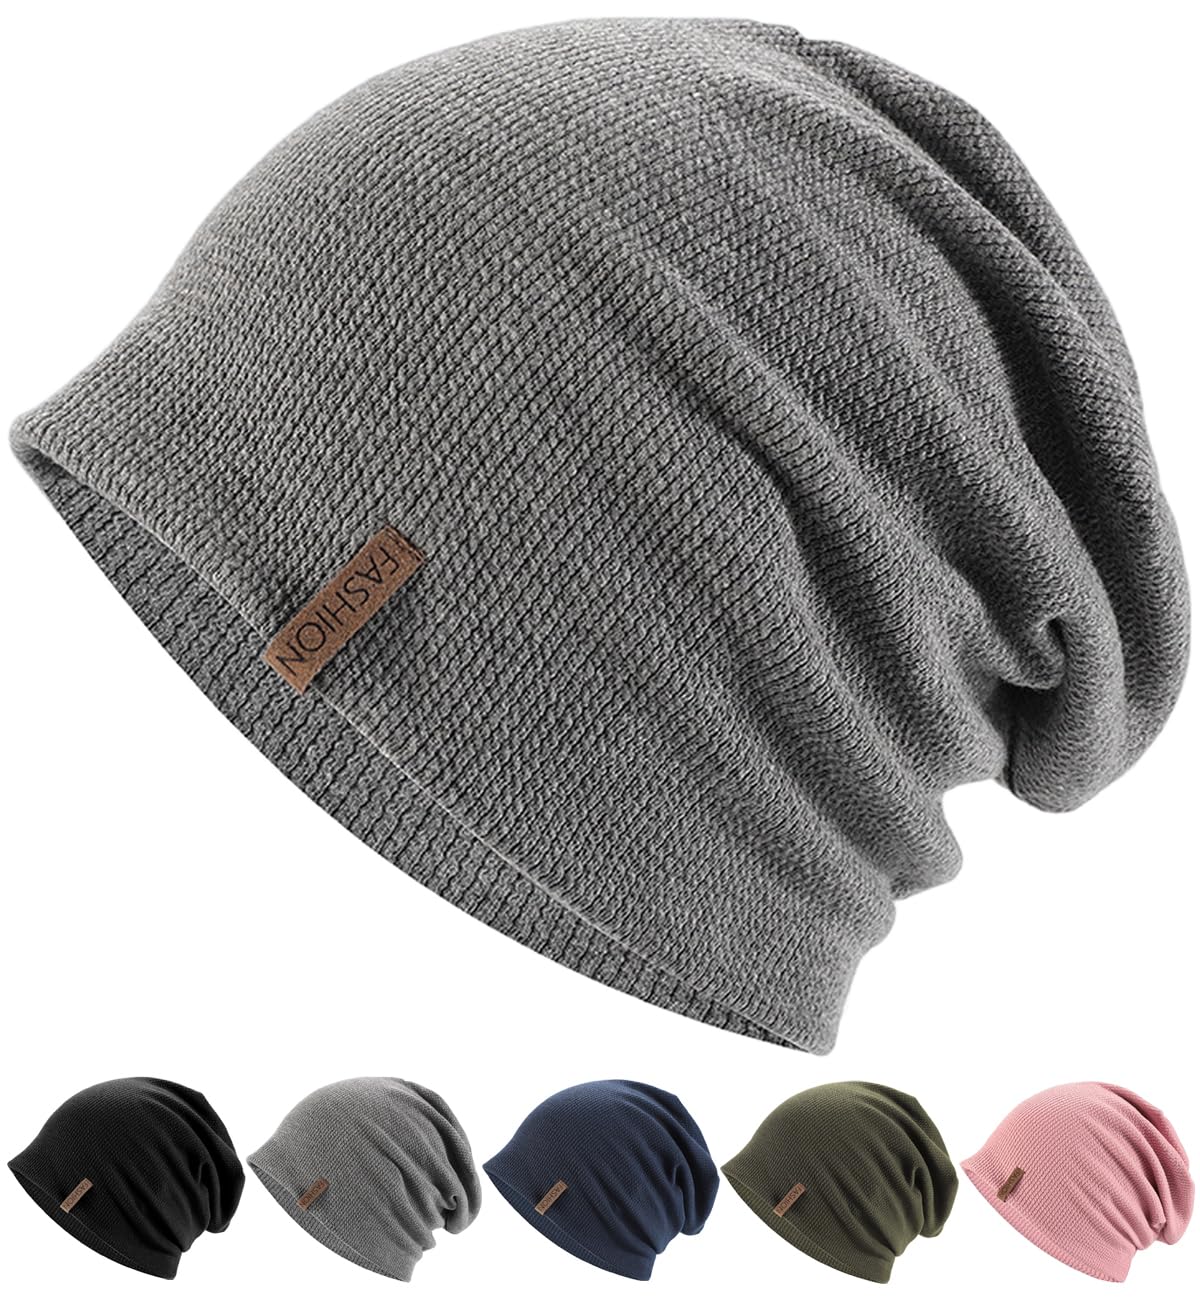 Lavento ニット帽 ニット帽子メンズ 秋冬 かぶり心地の良さ・柔らかさの2層仕立て 伸縮性・360度美シルエット 帽子メンズ レディース 冬